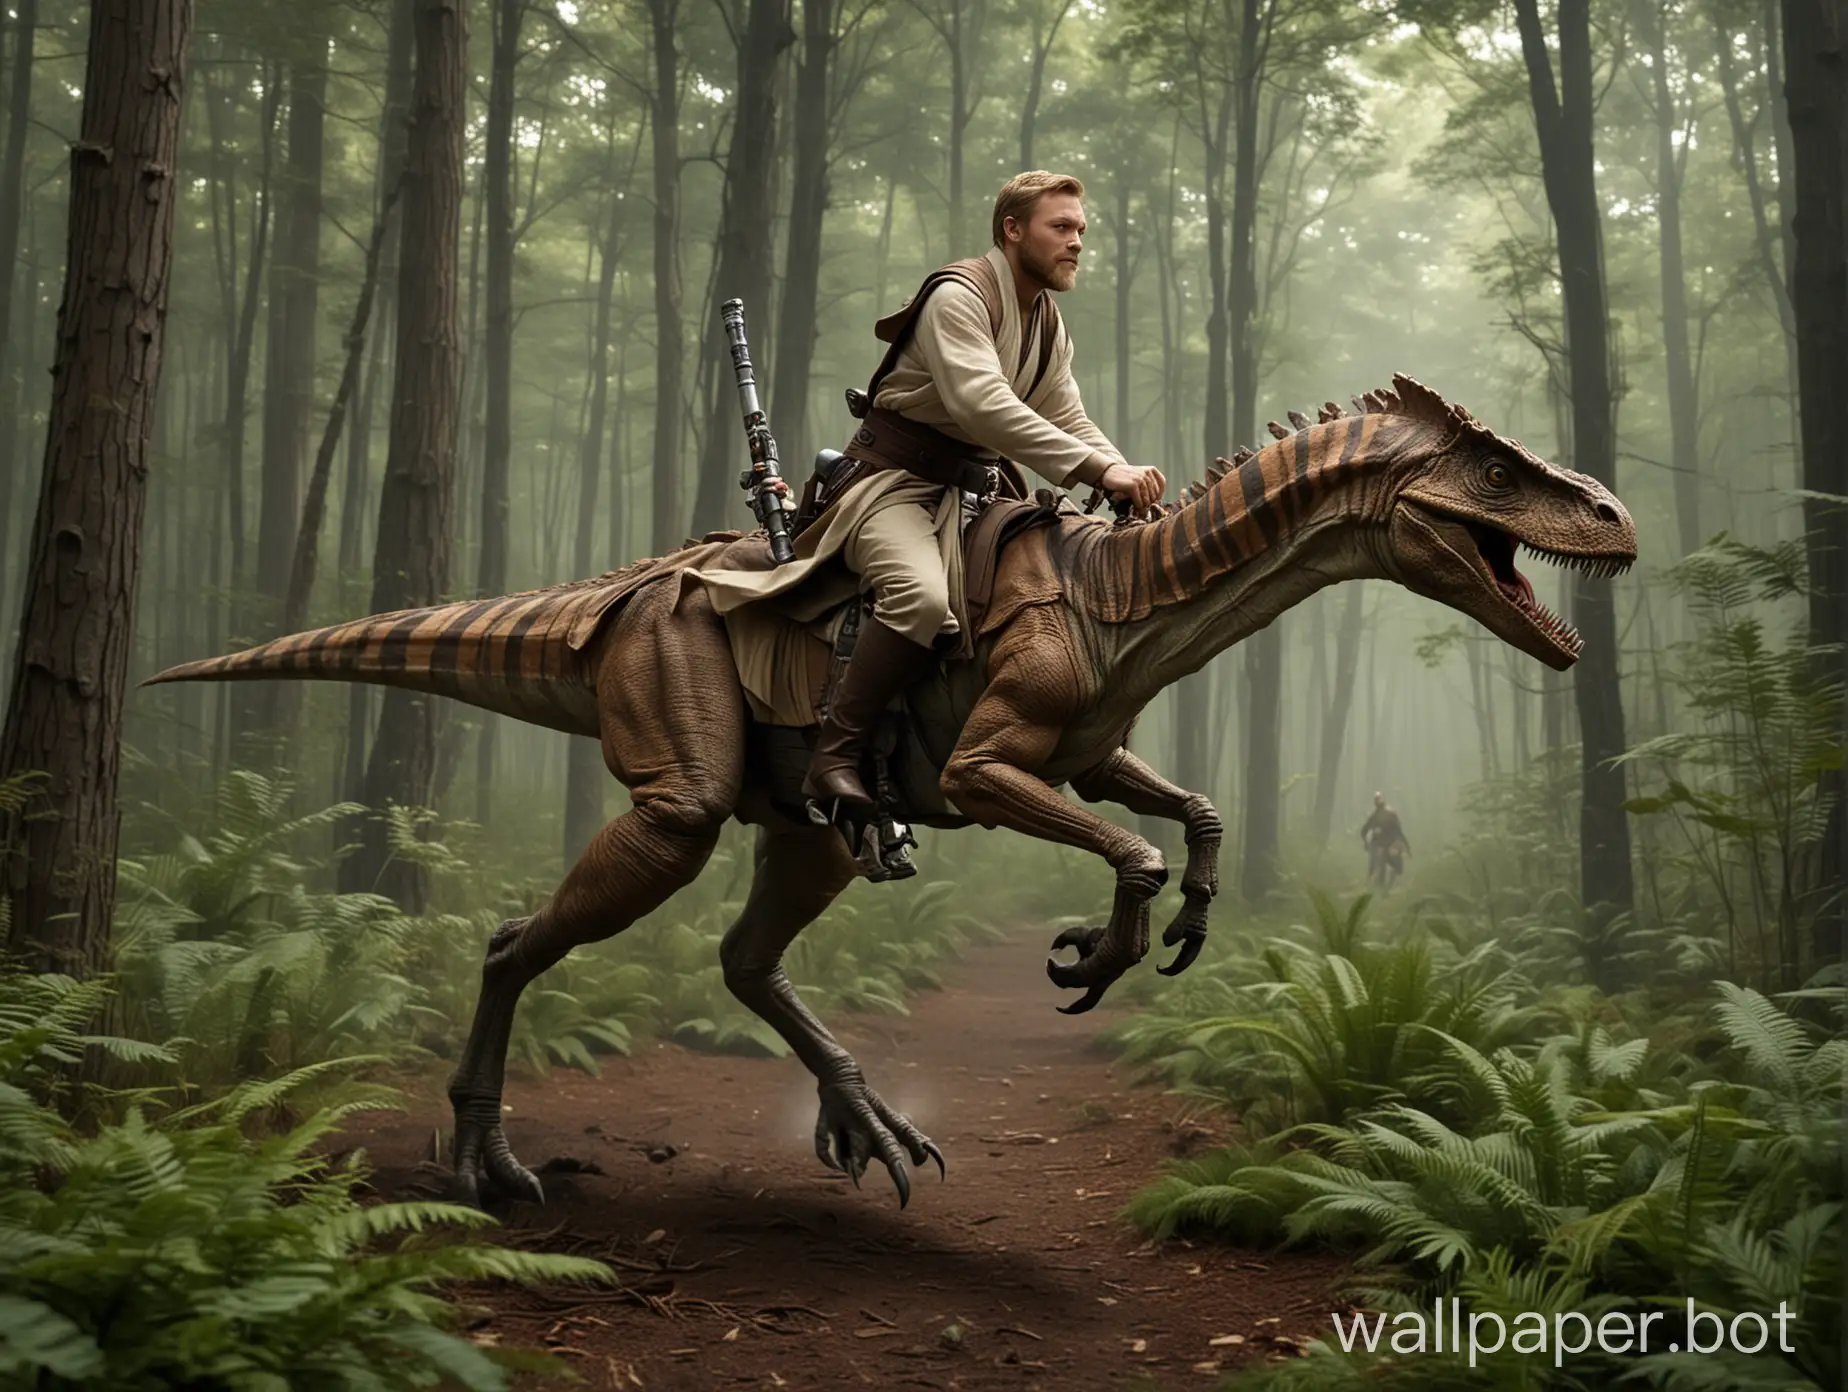 Jedi Obi-Wan Kenobi with a lightsaber rides through the forest on a velociraptor